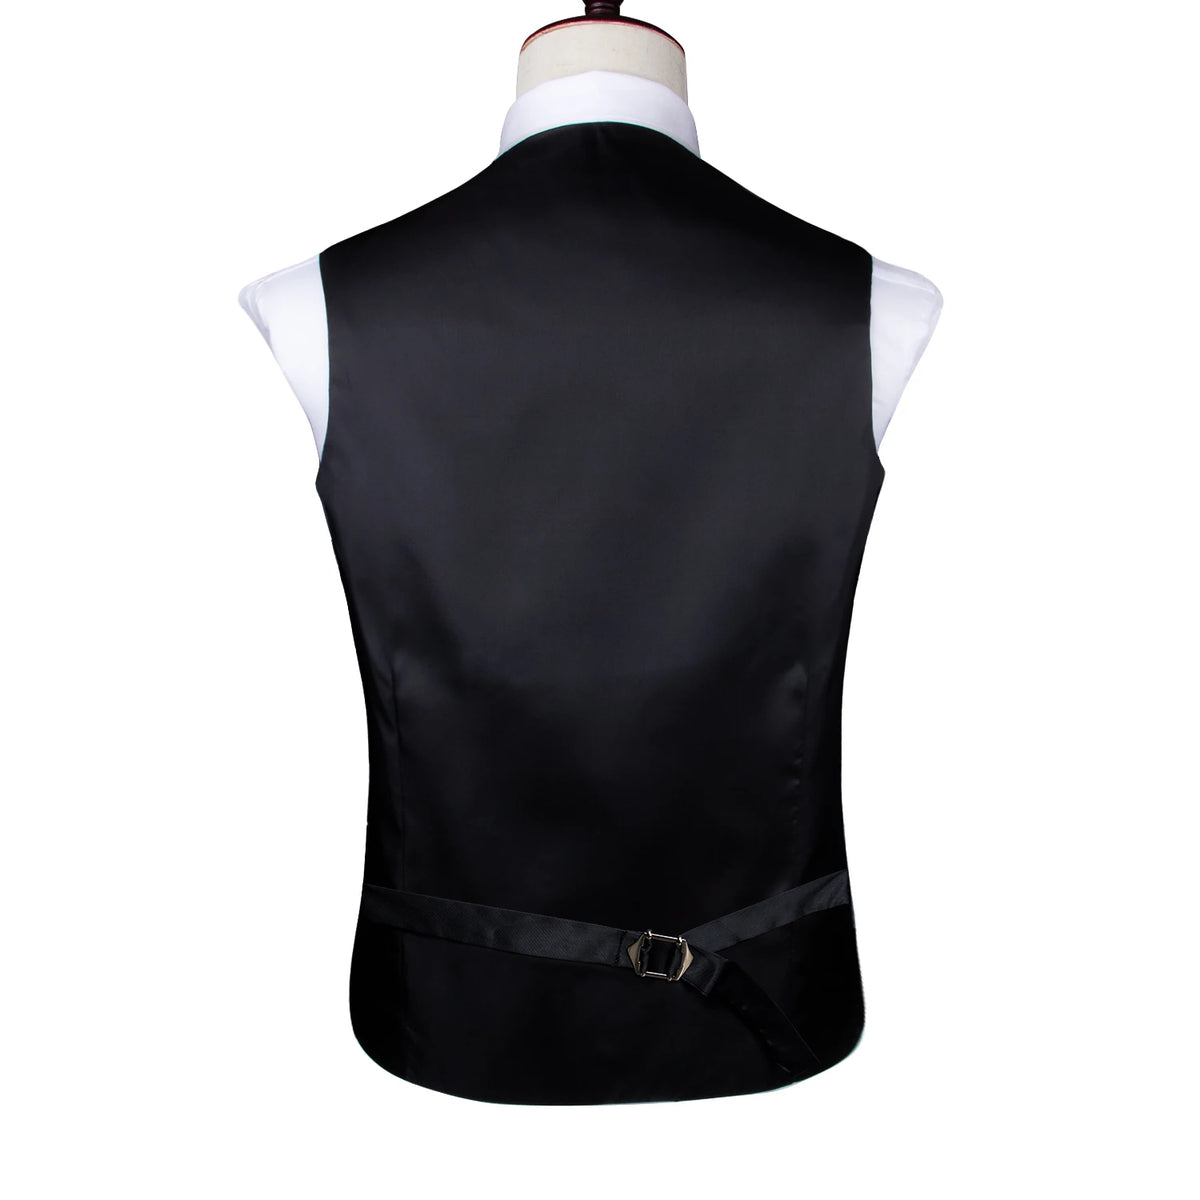 a black vest on a mannequin mannequin mannequin manne